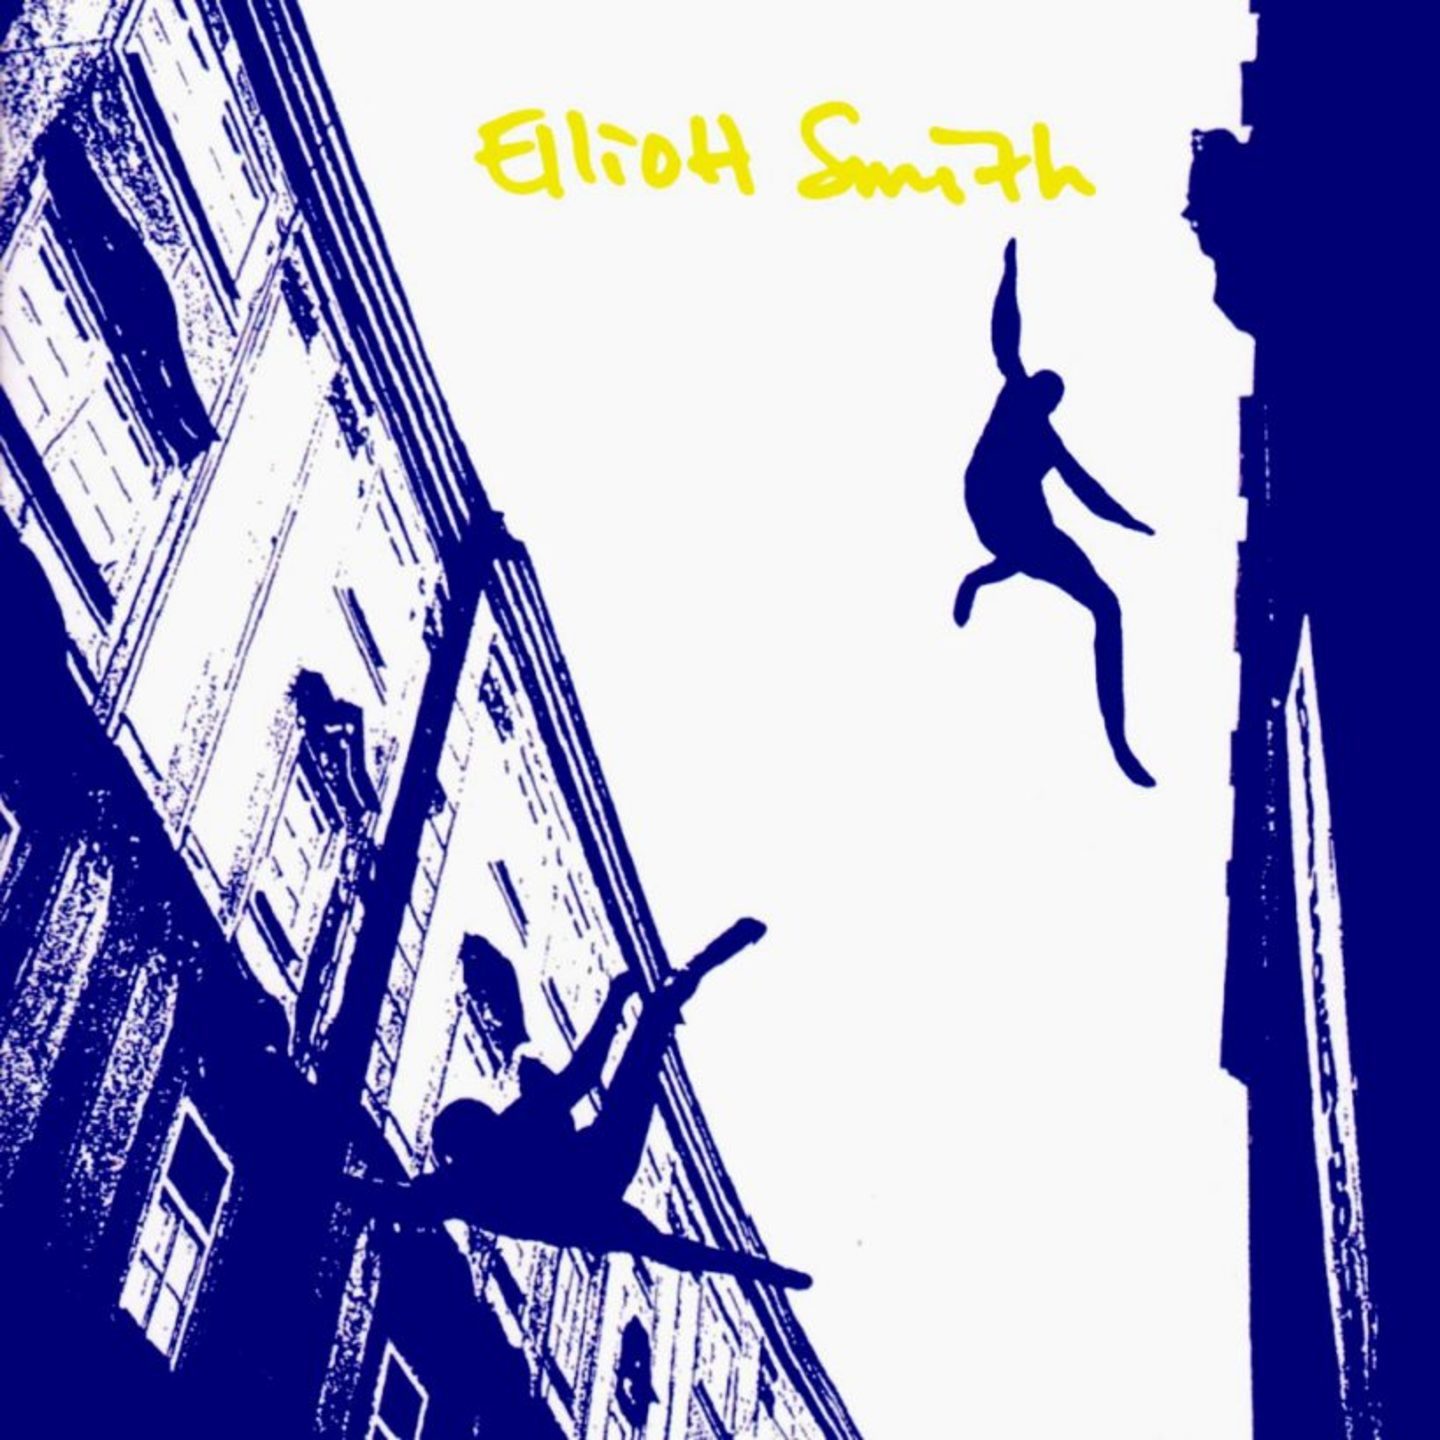 ELLIOT SMITH - ST LP 25th Anniversary Remastered